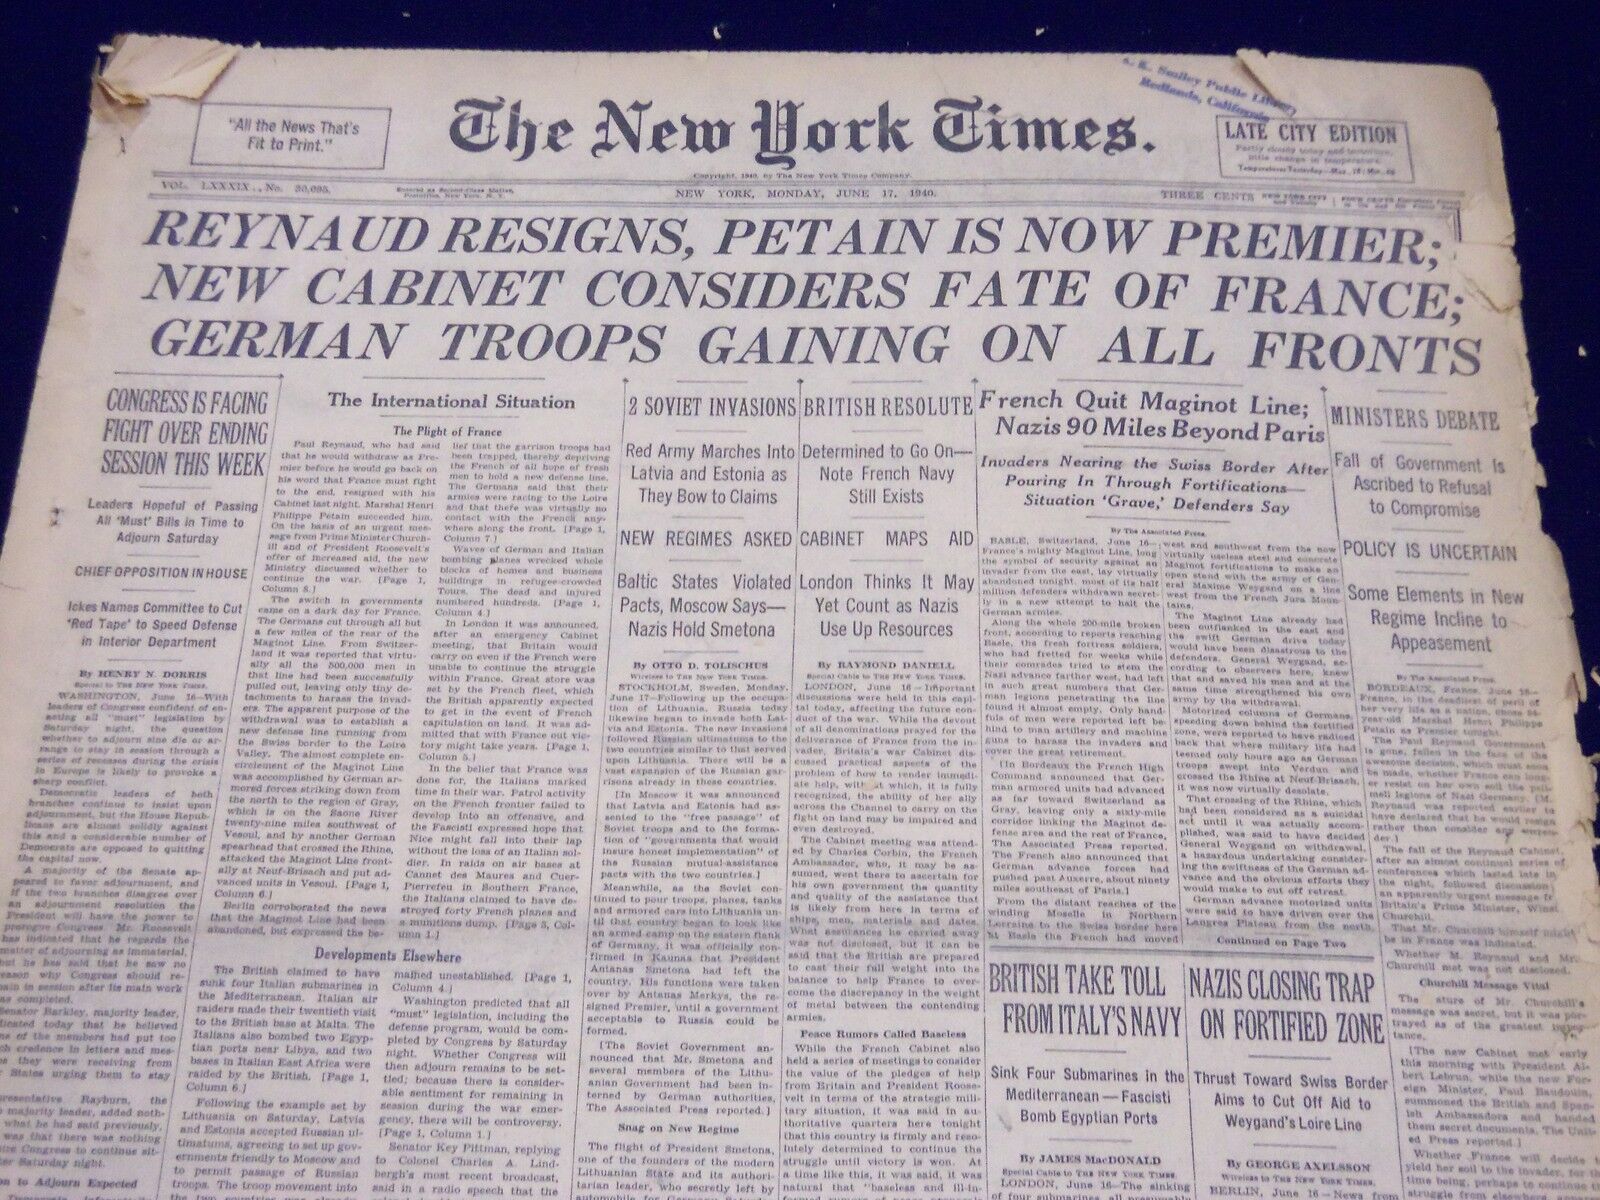 1940 JUNE 17 NEW YORK TIMES - REYNAUD RESIGNS PETAIN IS NOW PREMIER - NT 188